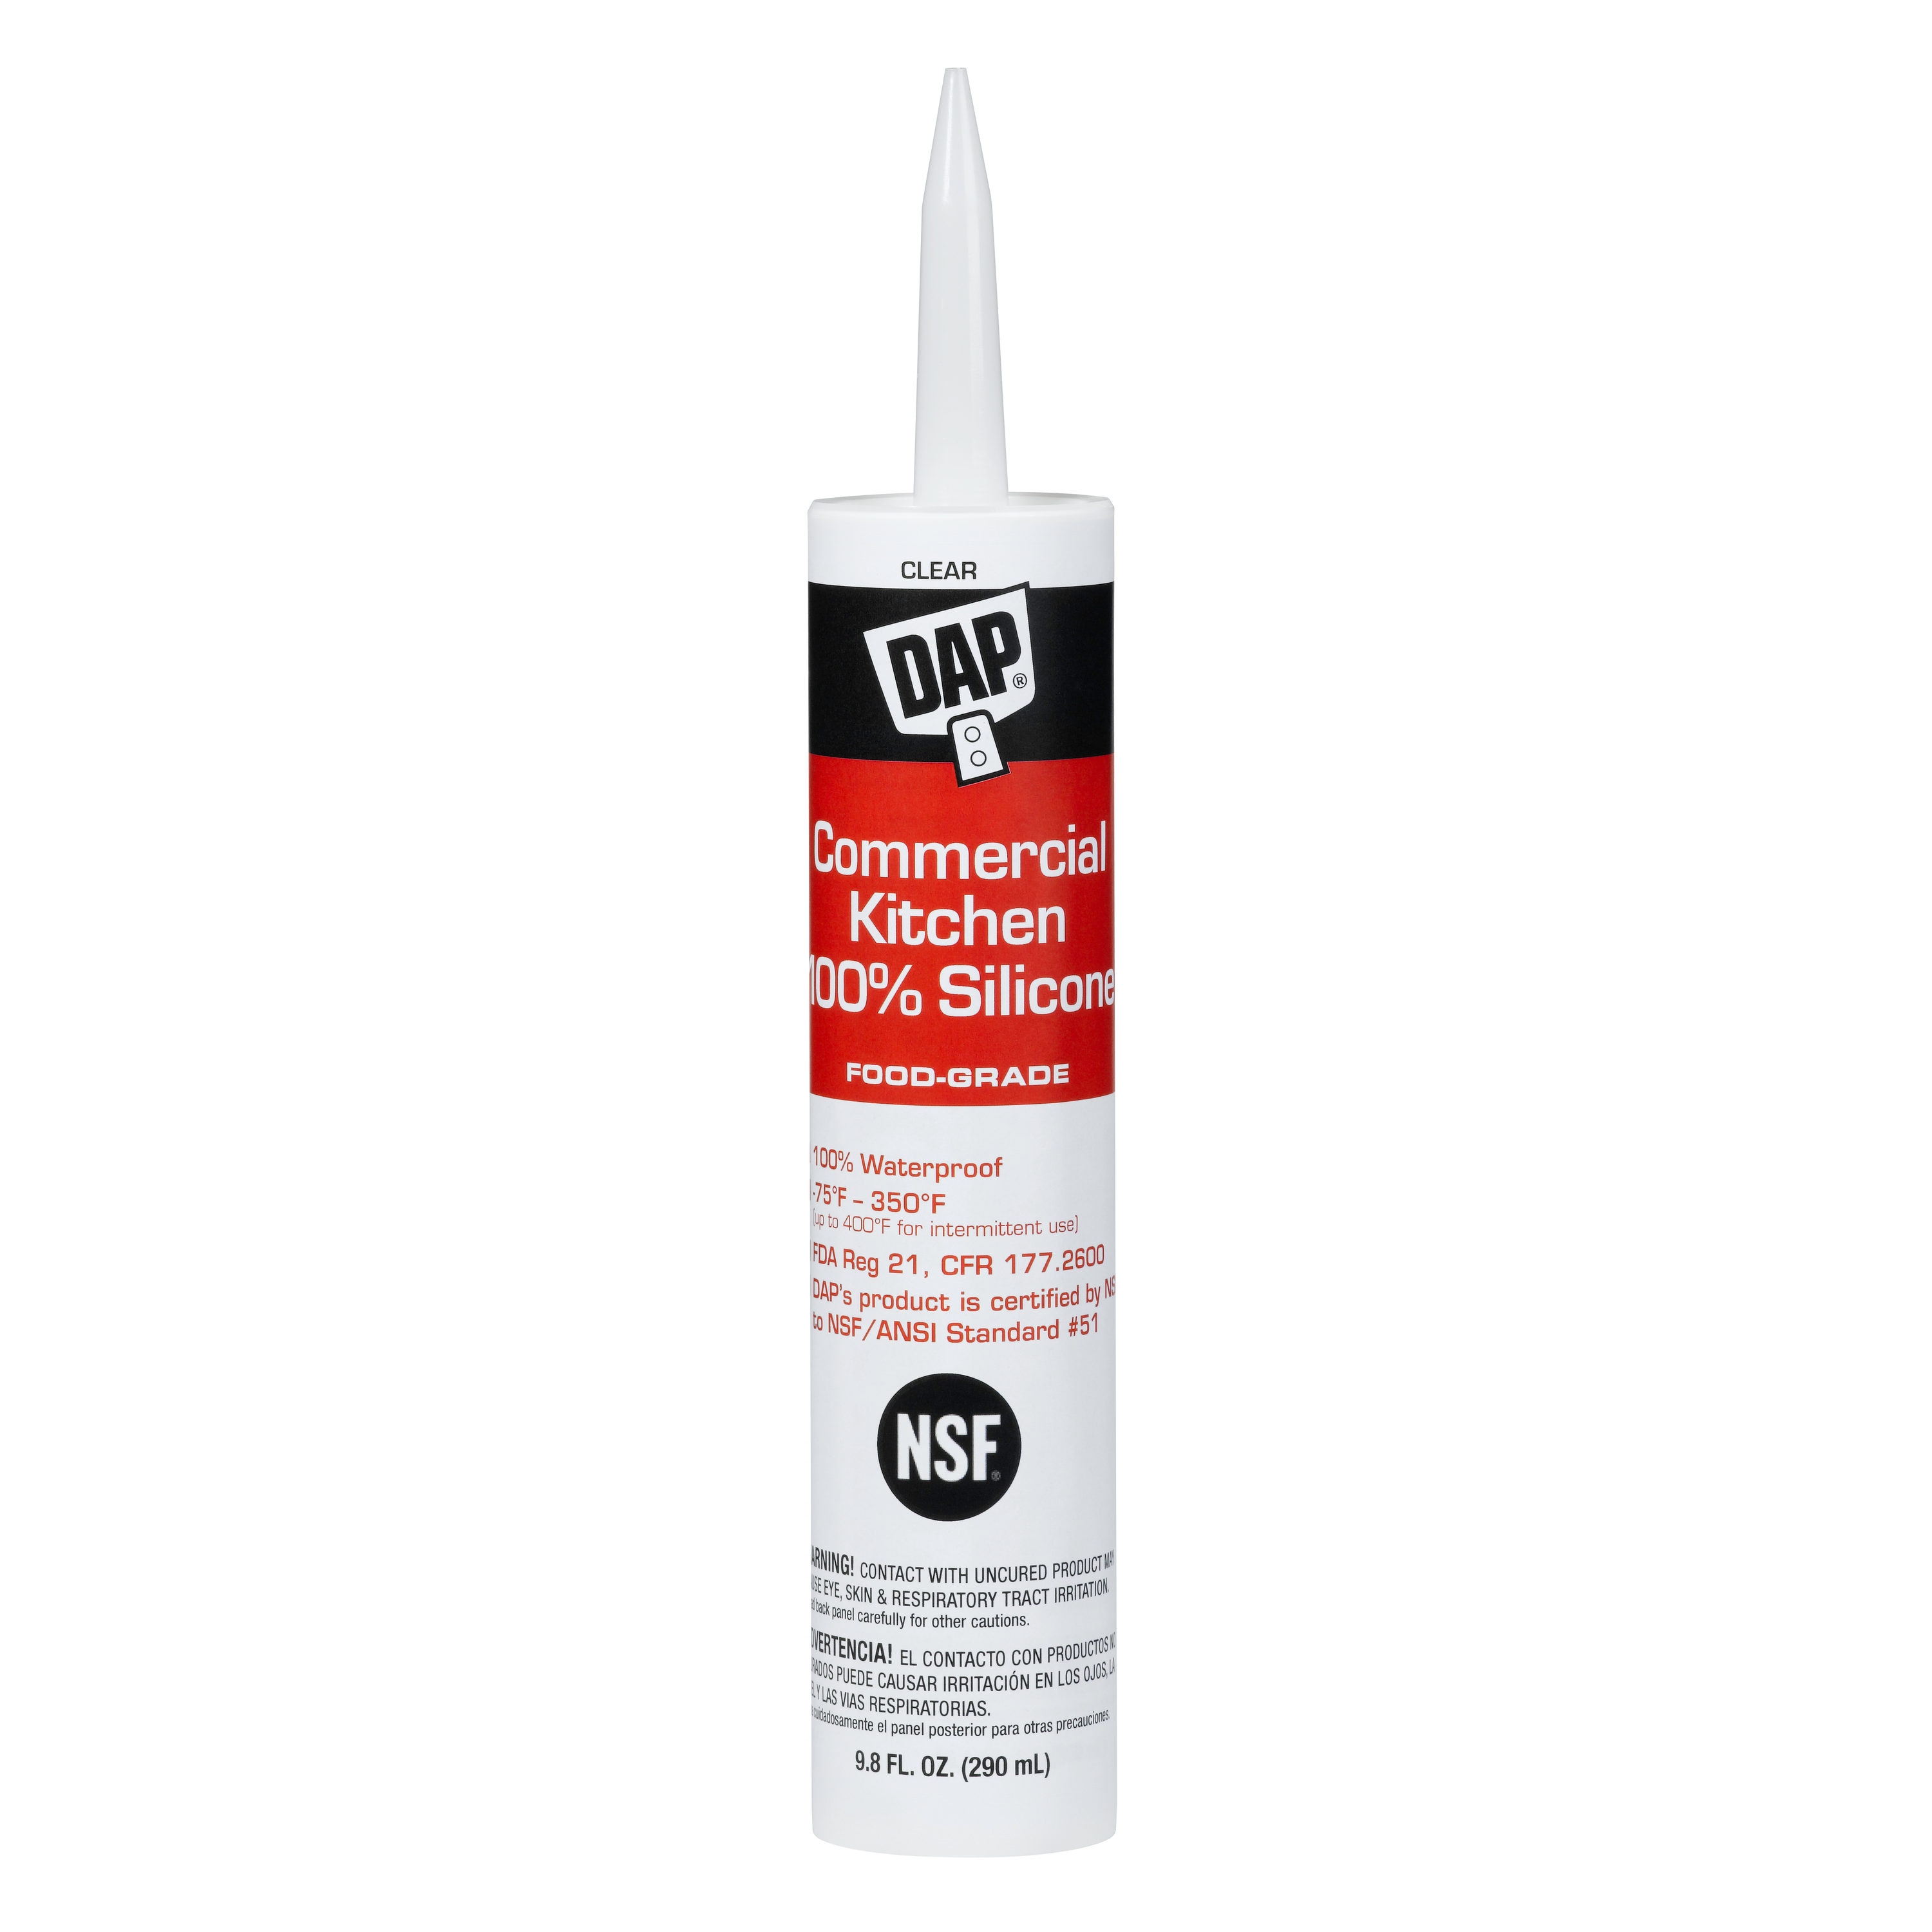 DAP All Purpose 100% Silicone Adhesive Sealant